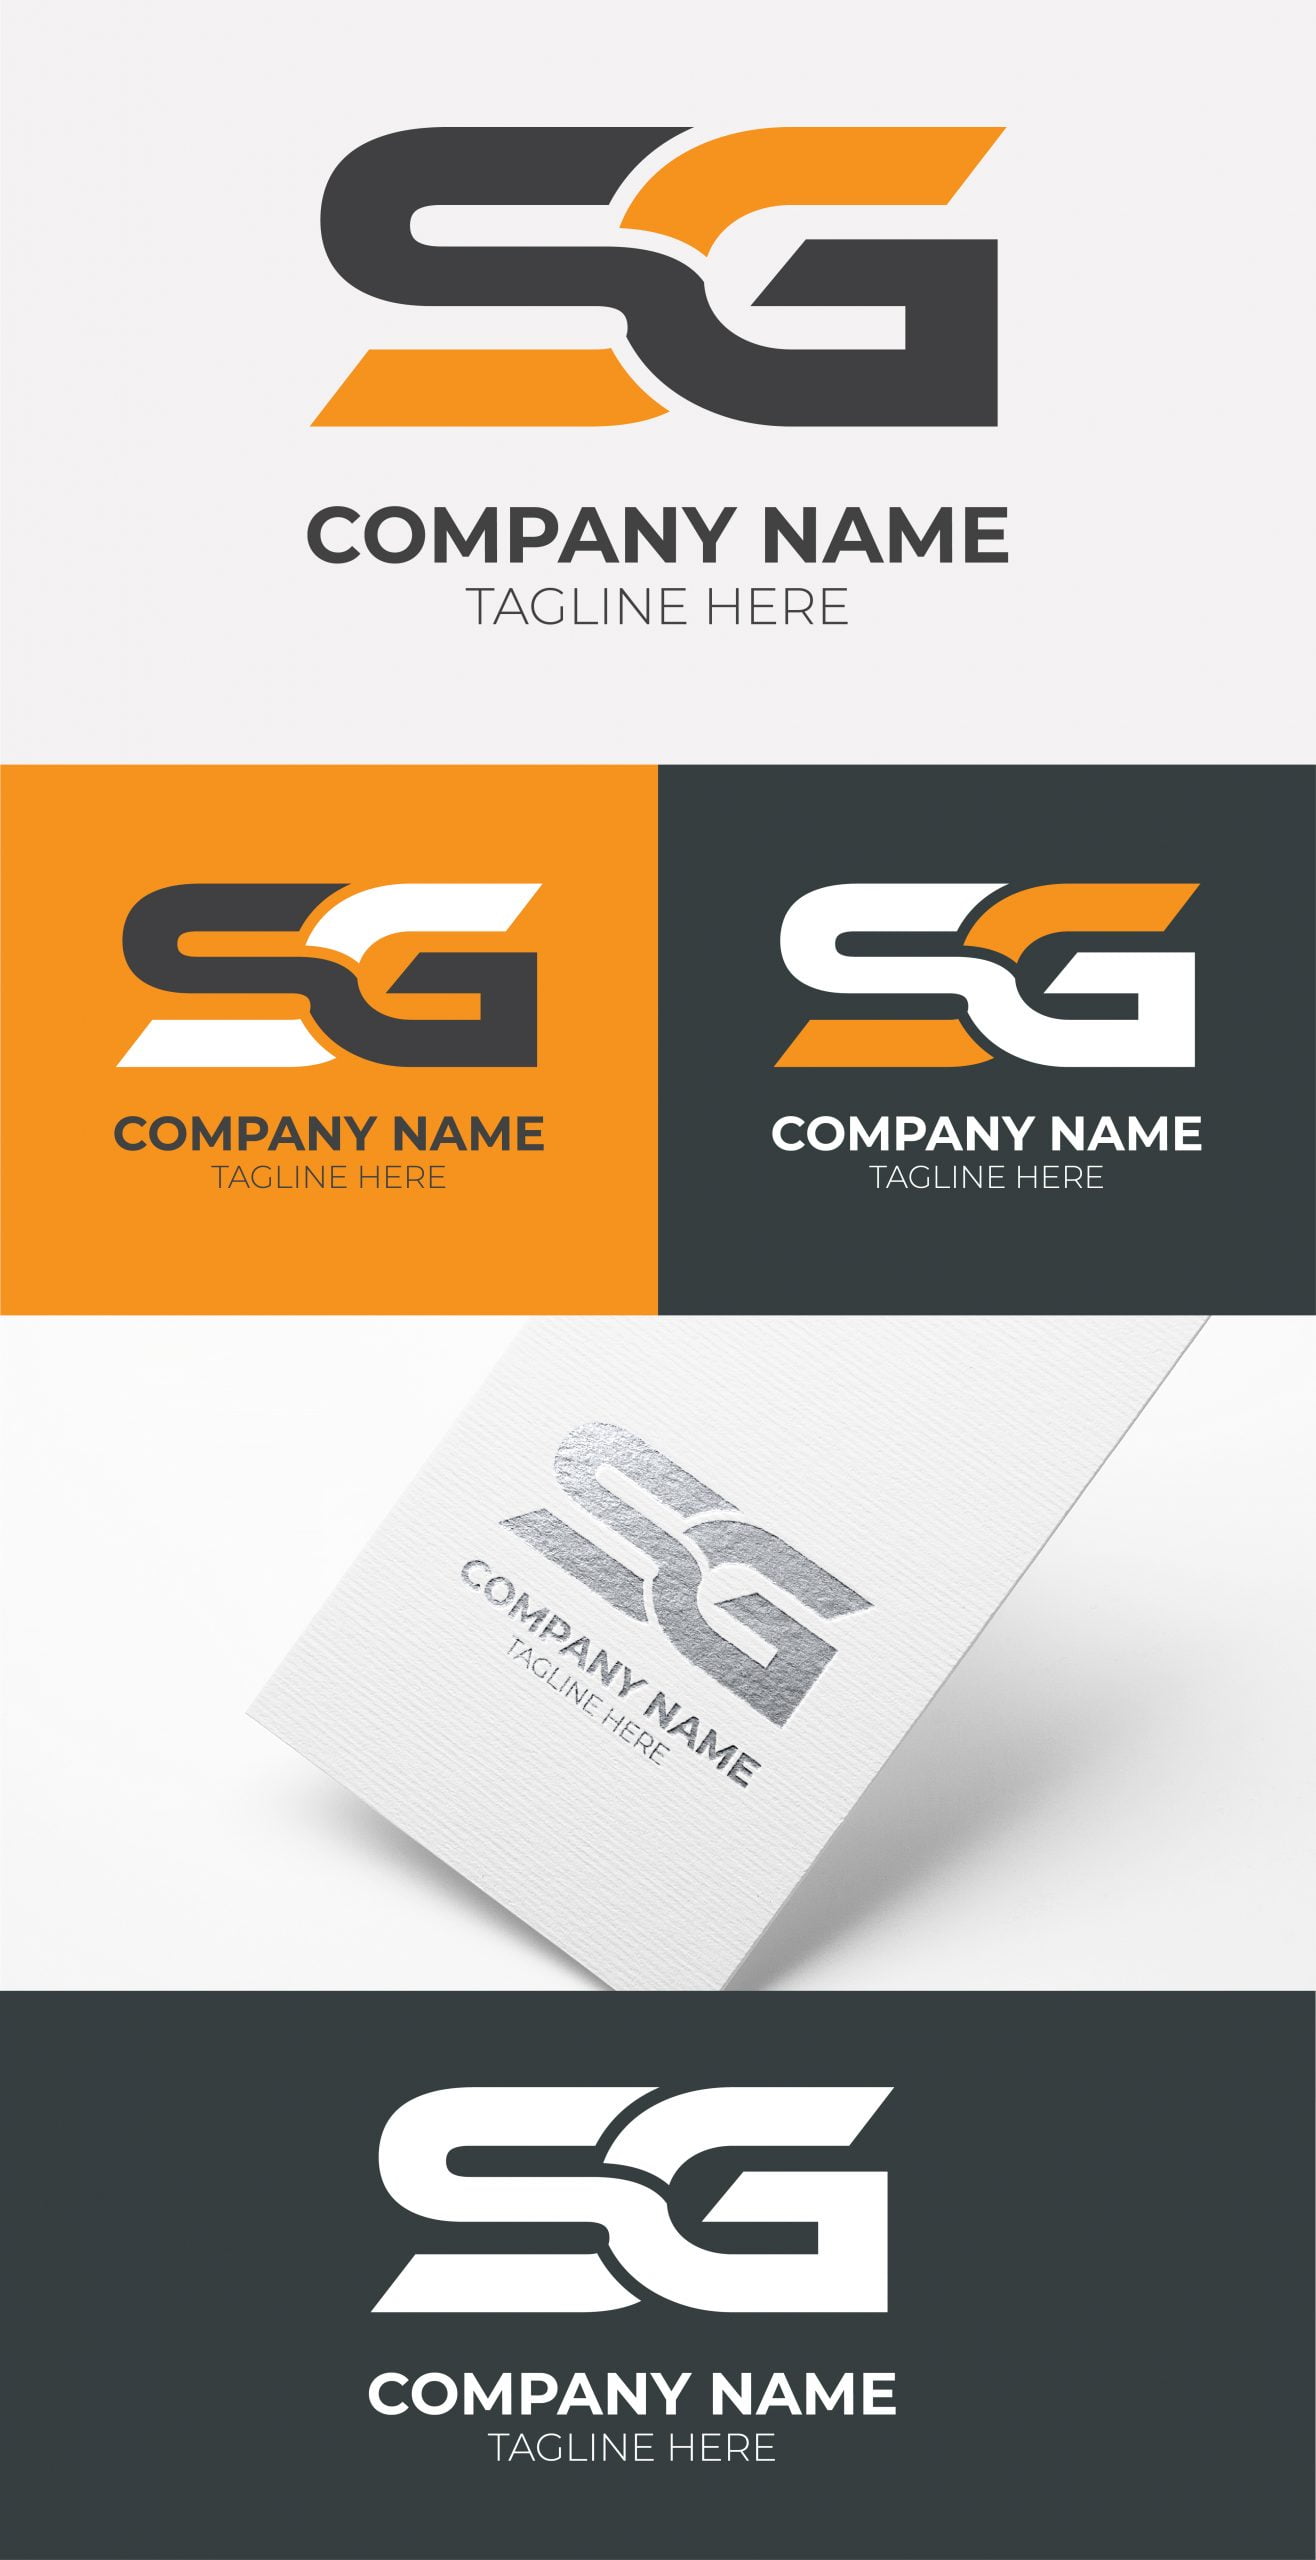 business logo design free download